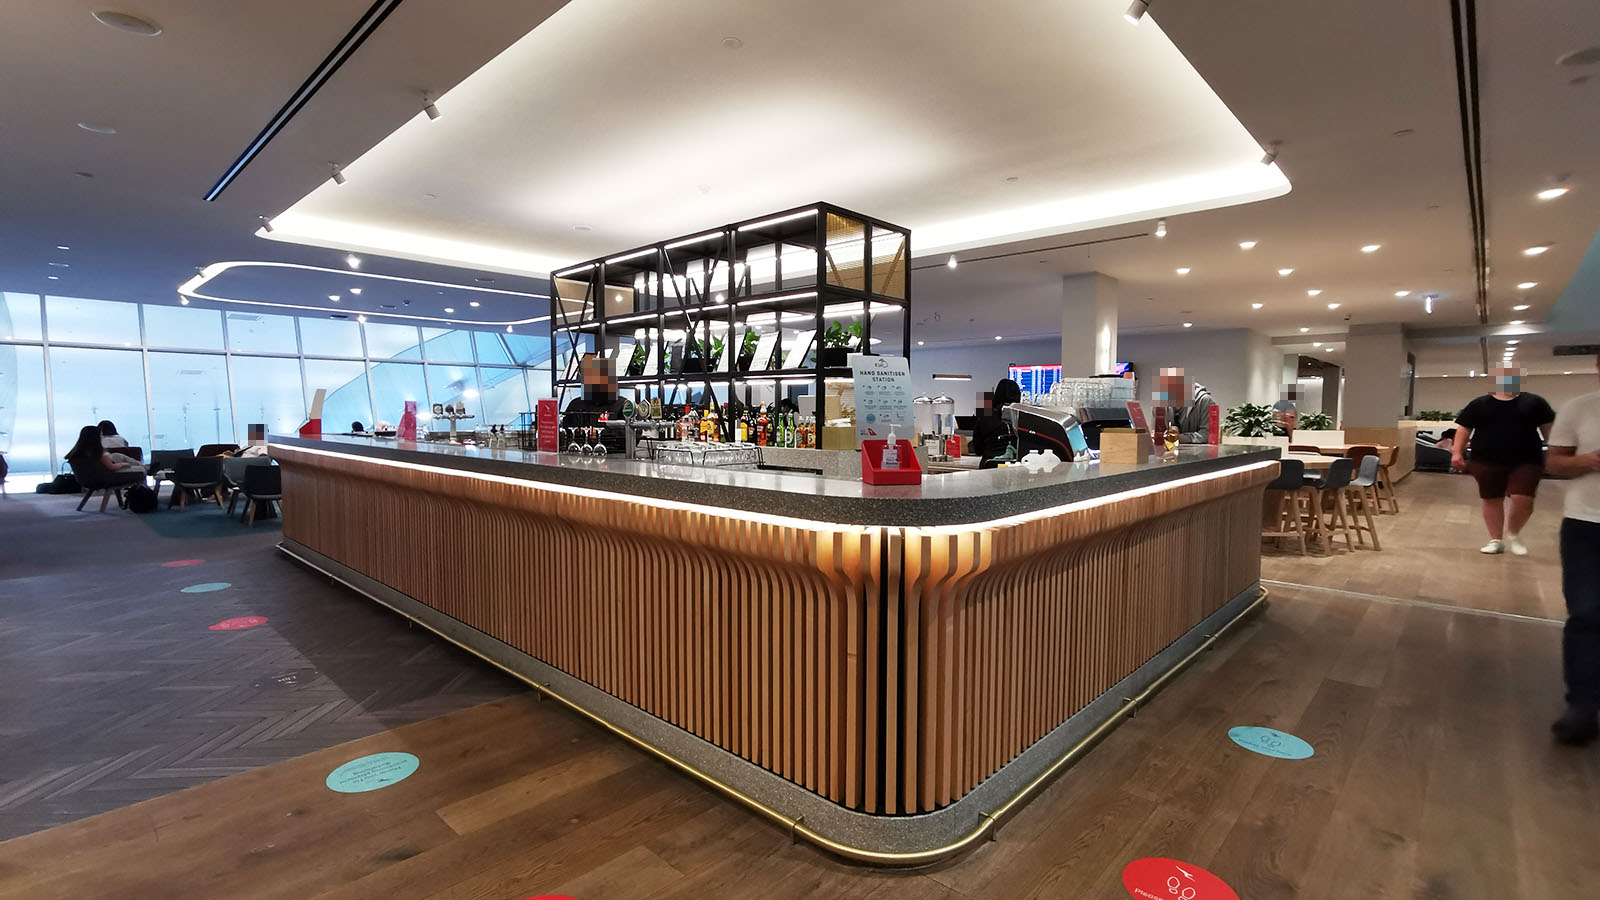 Qantas Club Melbourne bar and coffee counter